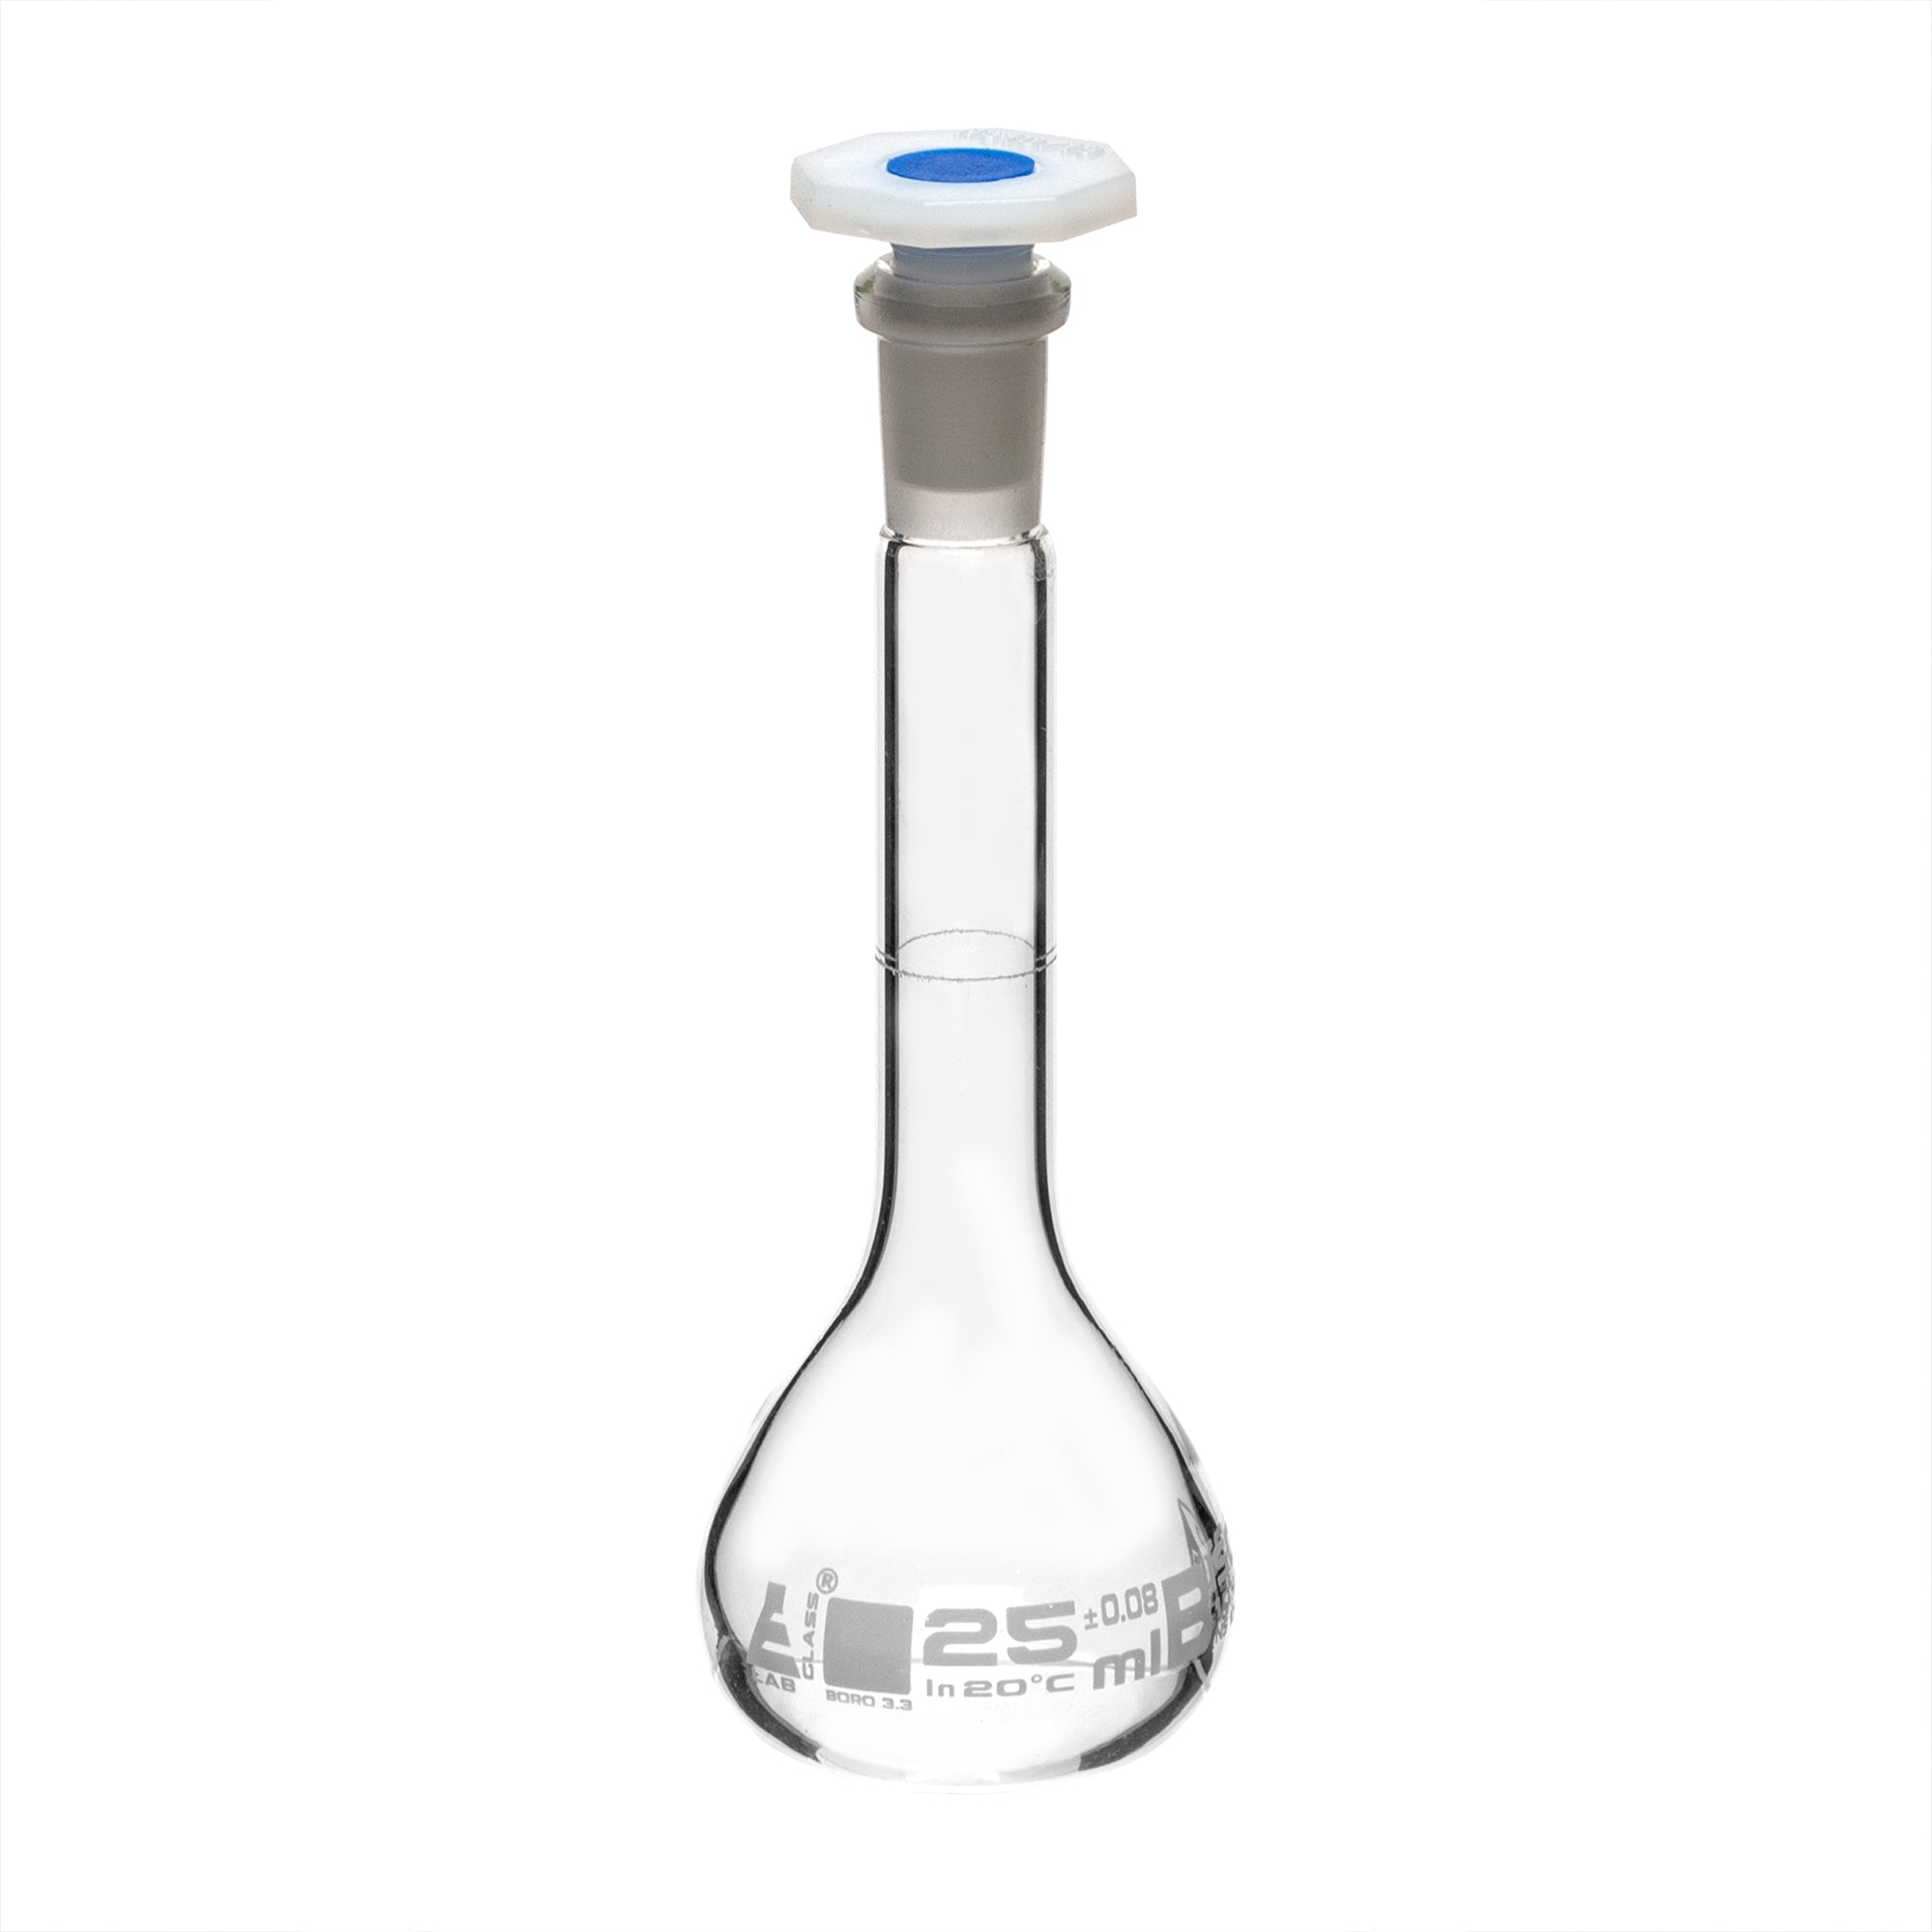 Borosilicate Glass Volumetric Flask with Polyethylene Stopper, 25ml, Class B, White Print, Autoclavable